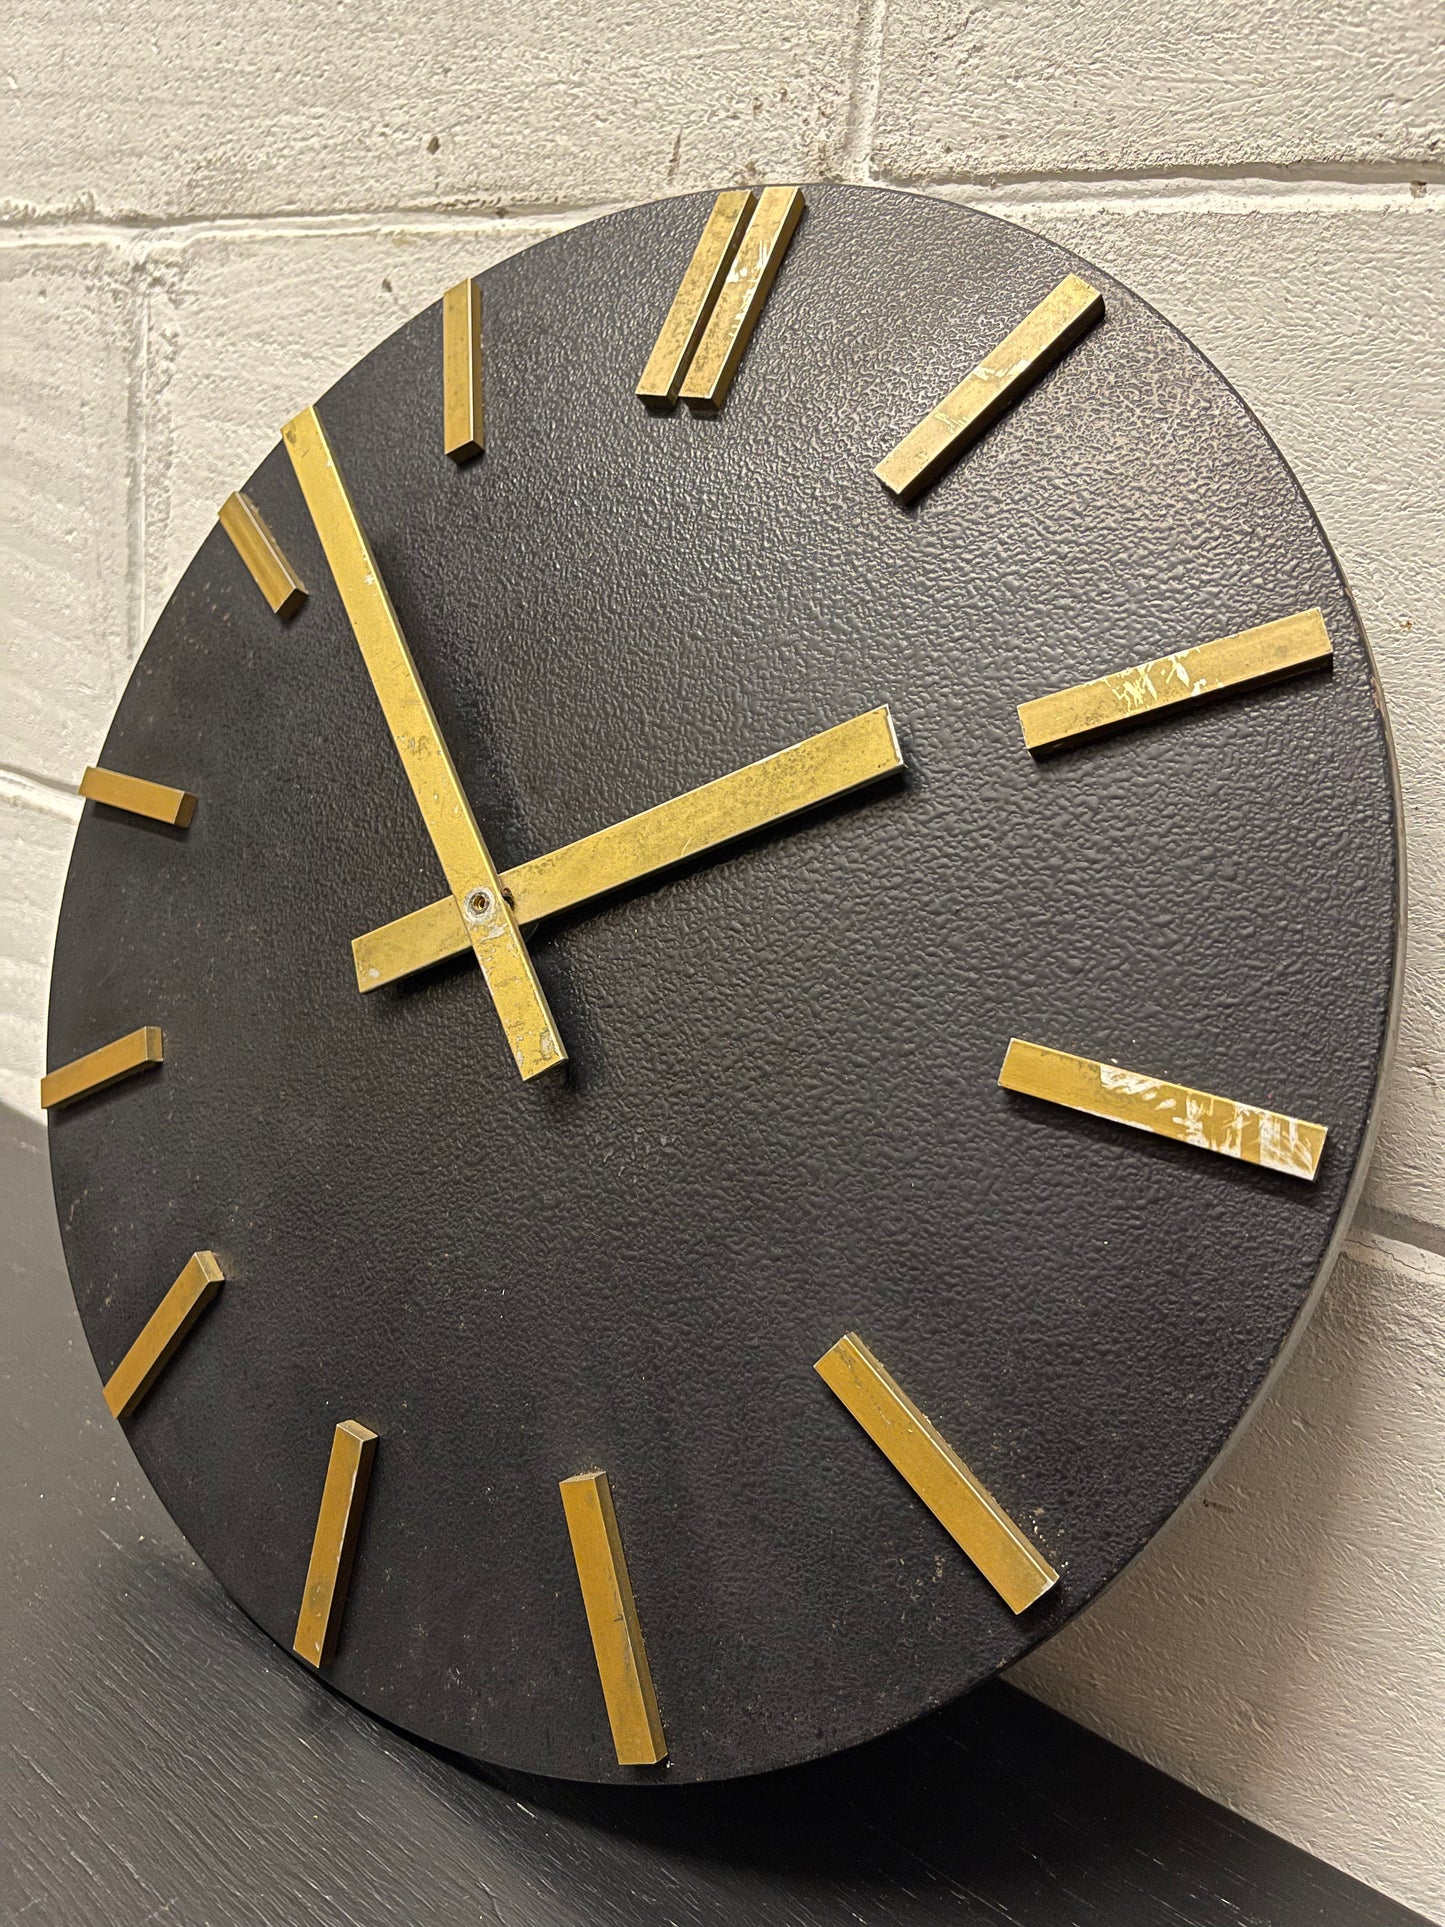 1960s East German Modernist Clocks By RFT